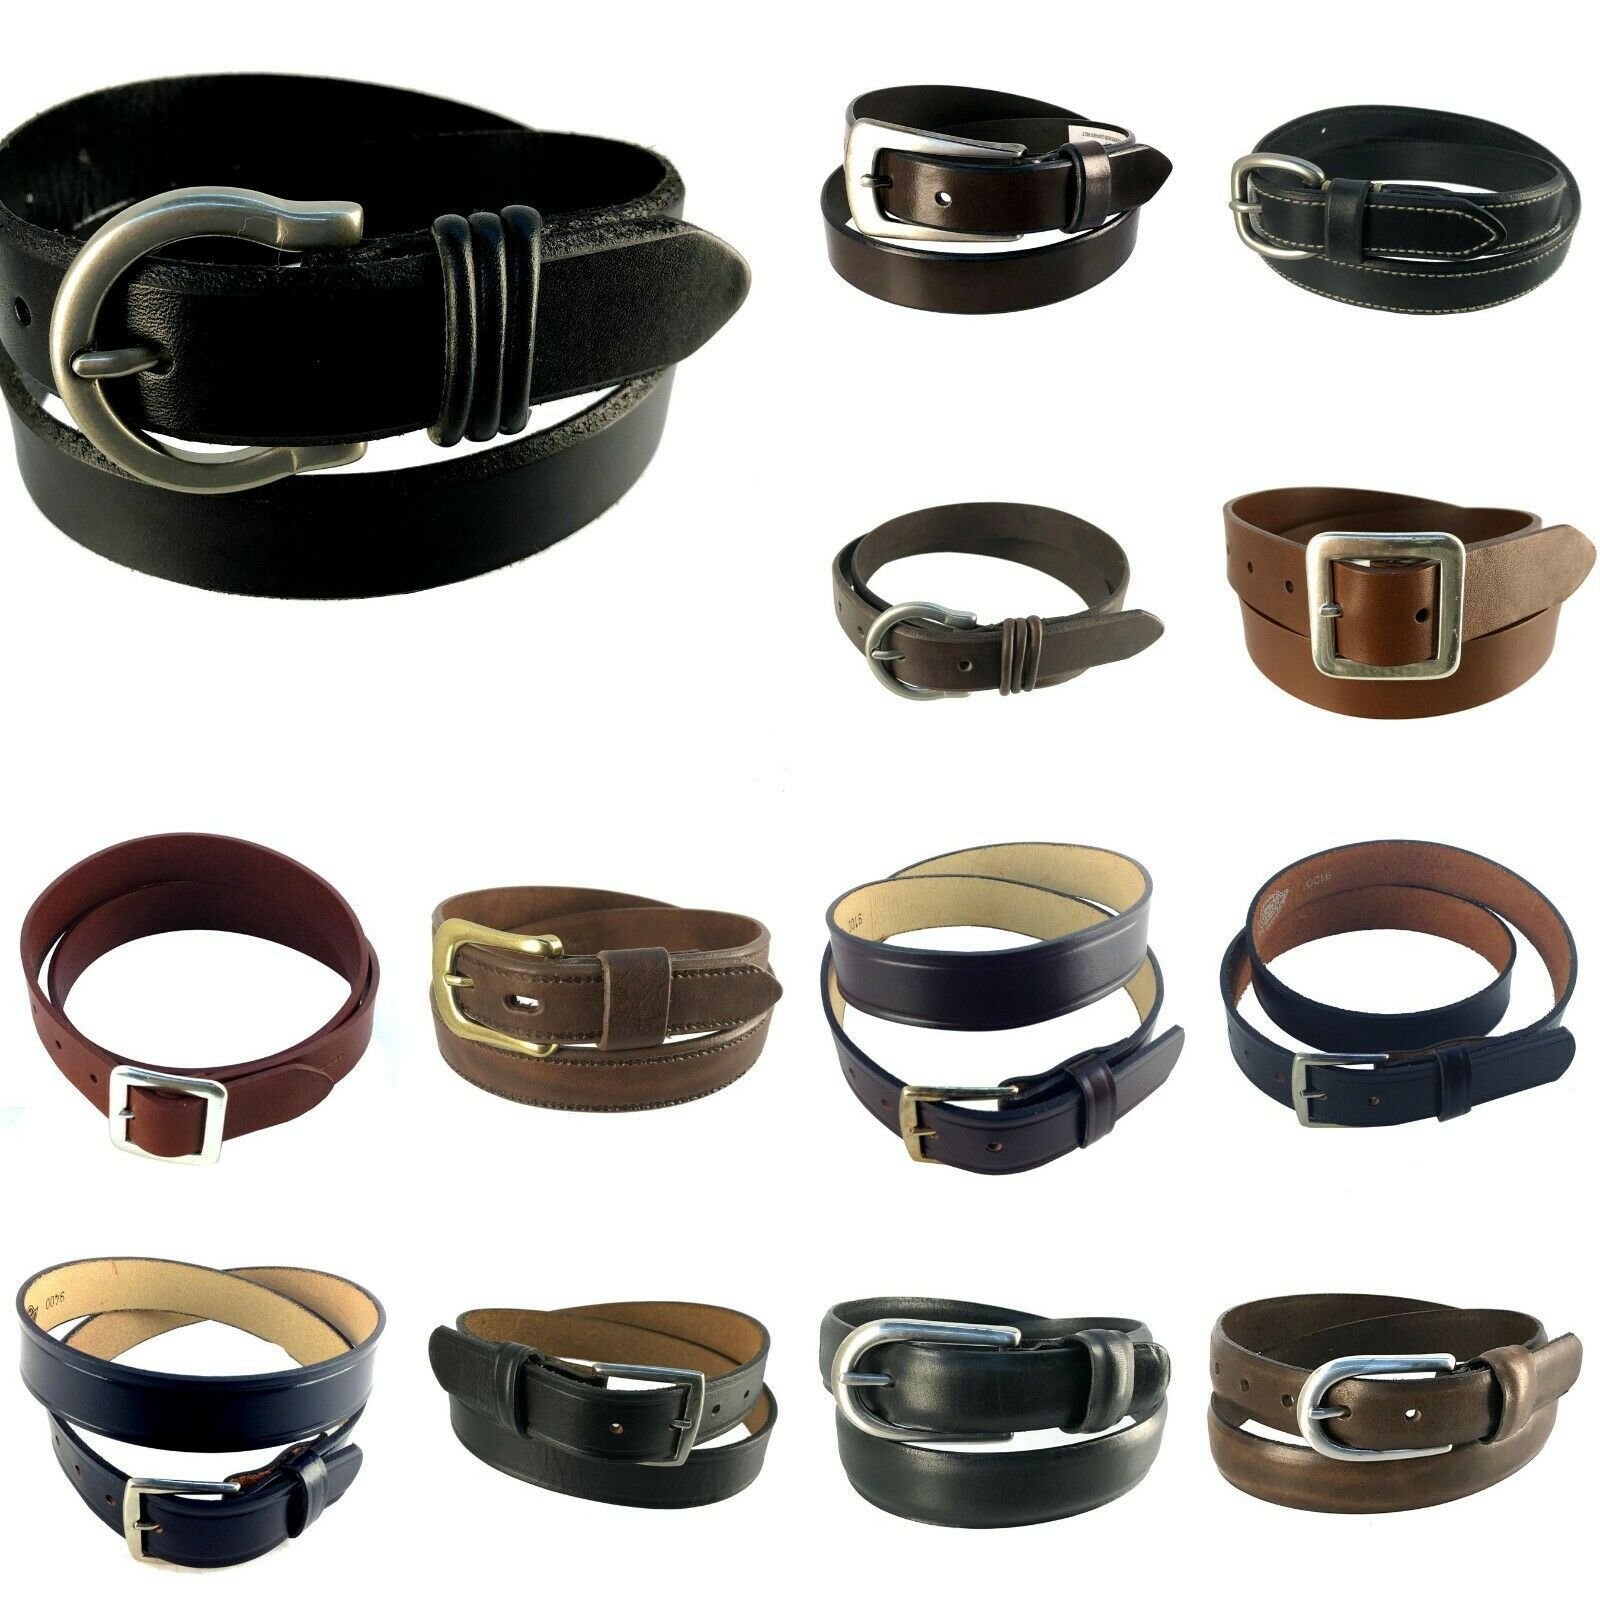 (G-1) Dickes Or Dockers,  Designer Dress-Up, Men Leather Belts Assorted - $14.80 - $31.68